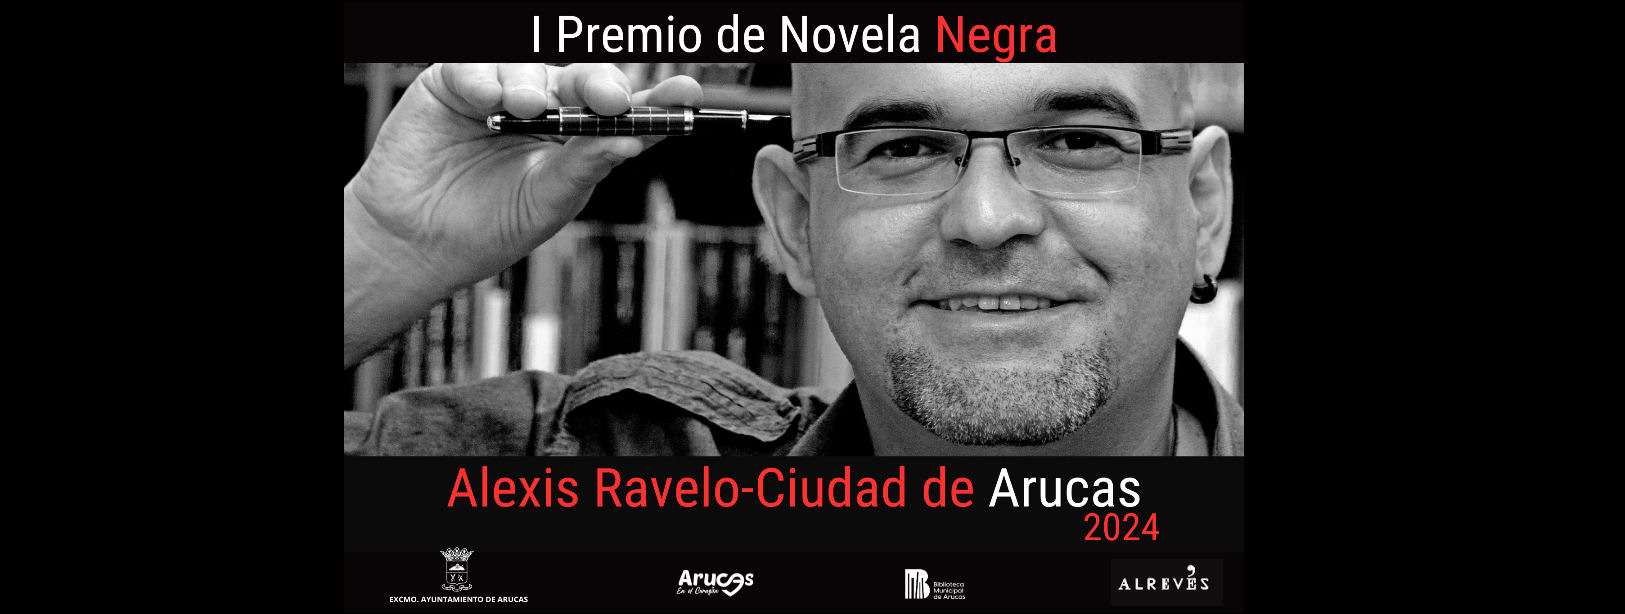 I PREMIO DE NOVELA NEGRA ALEXIS RAVELO - CIUDAD DE ARUCAS 2024